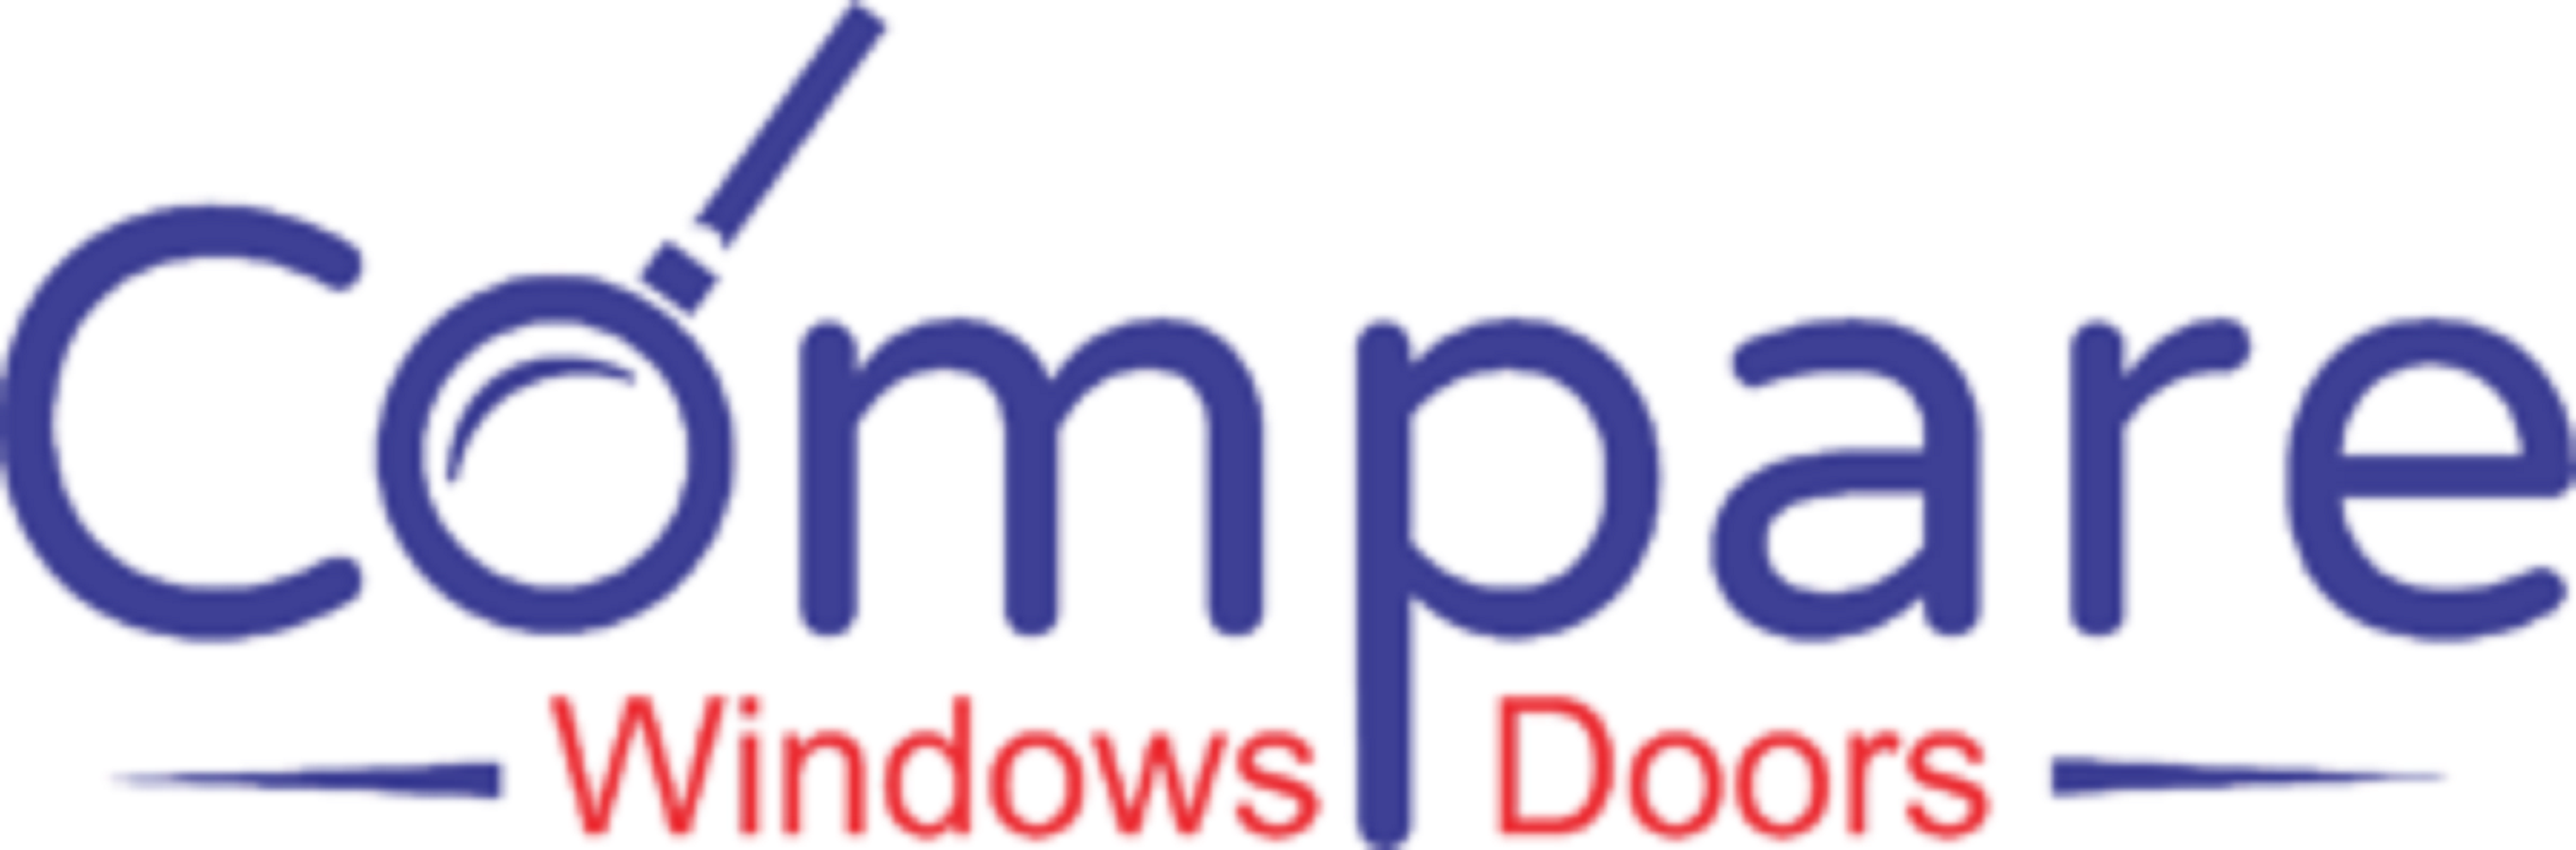 Compare Windows doors .com